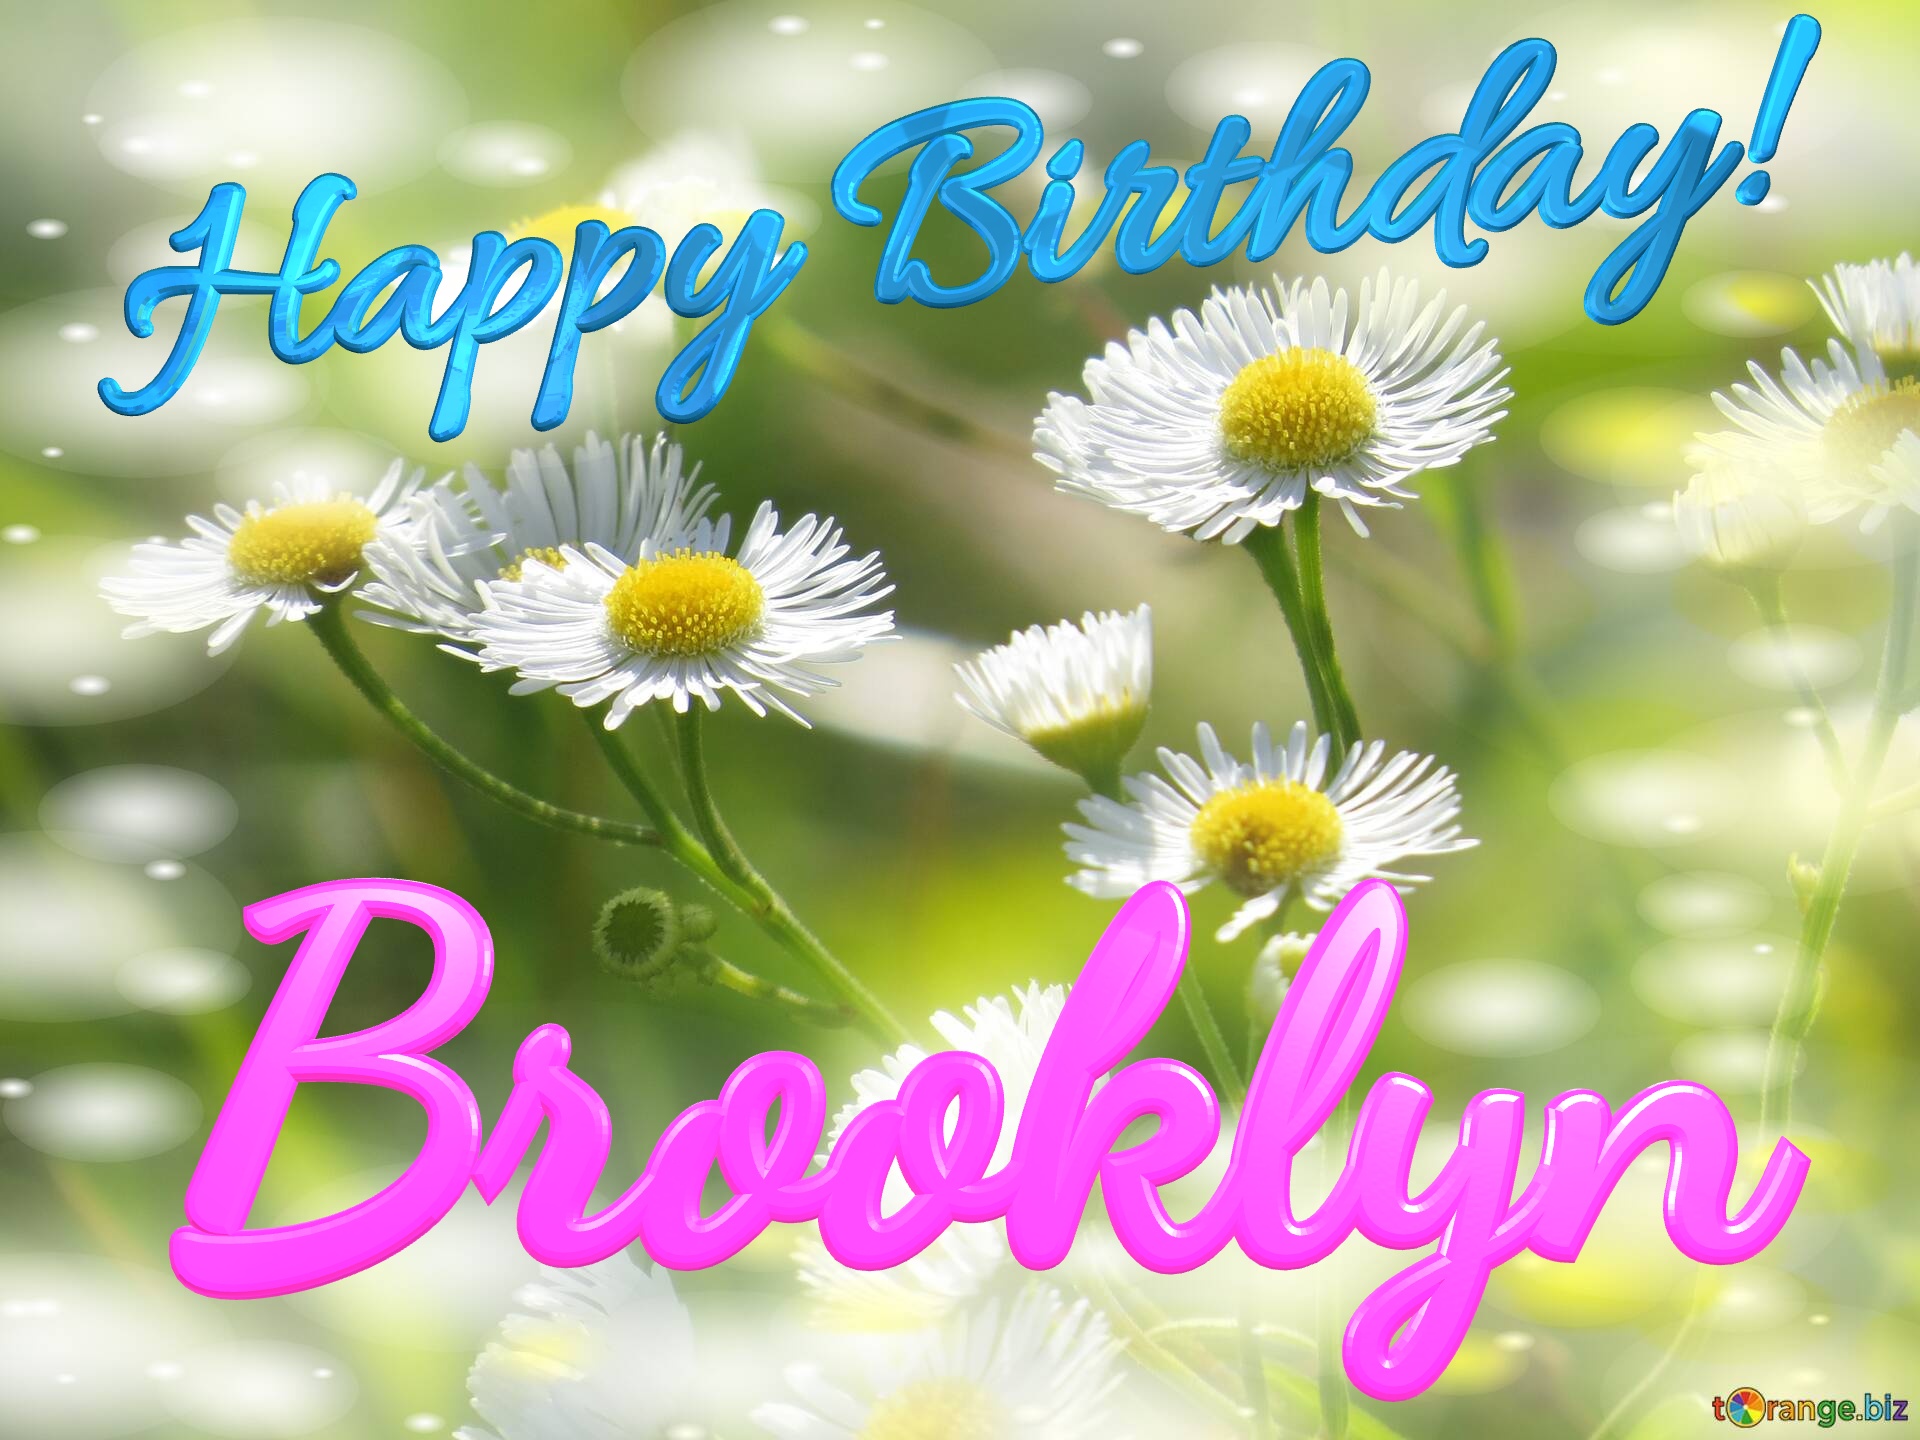 Brooklyn Happy Birthday! Daisies bokeh background №0